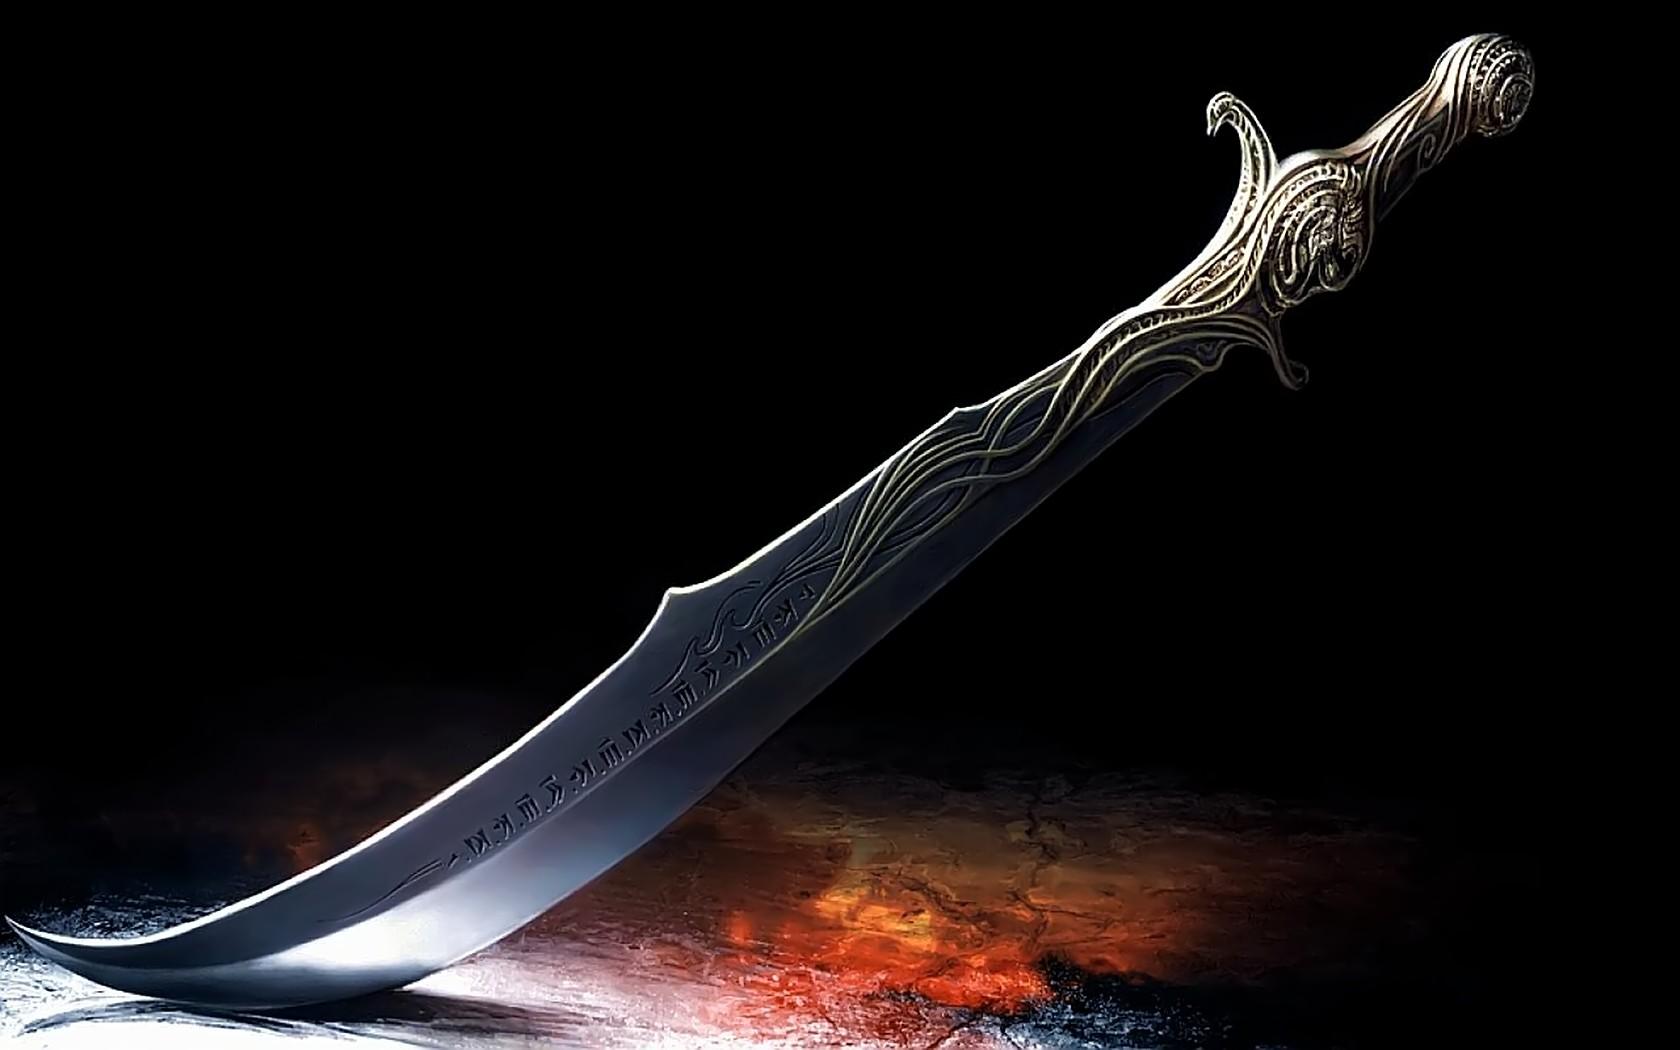 Prince of Persia sword blade on a HD desktop wallpaper